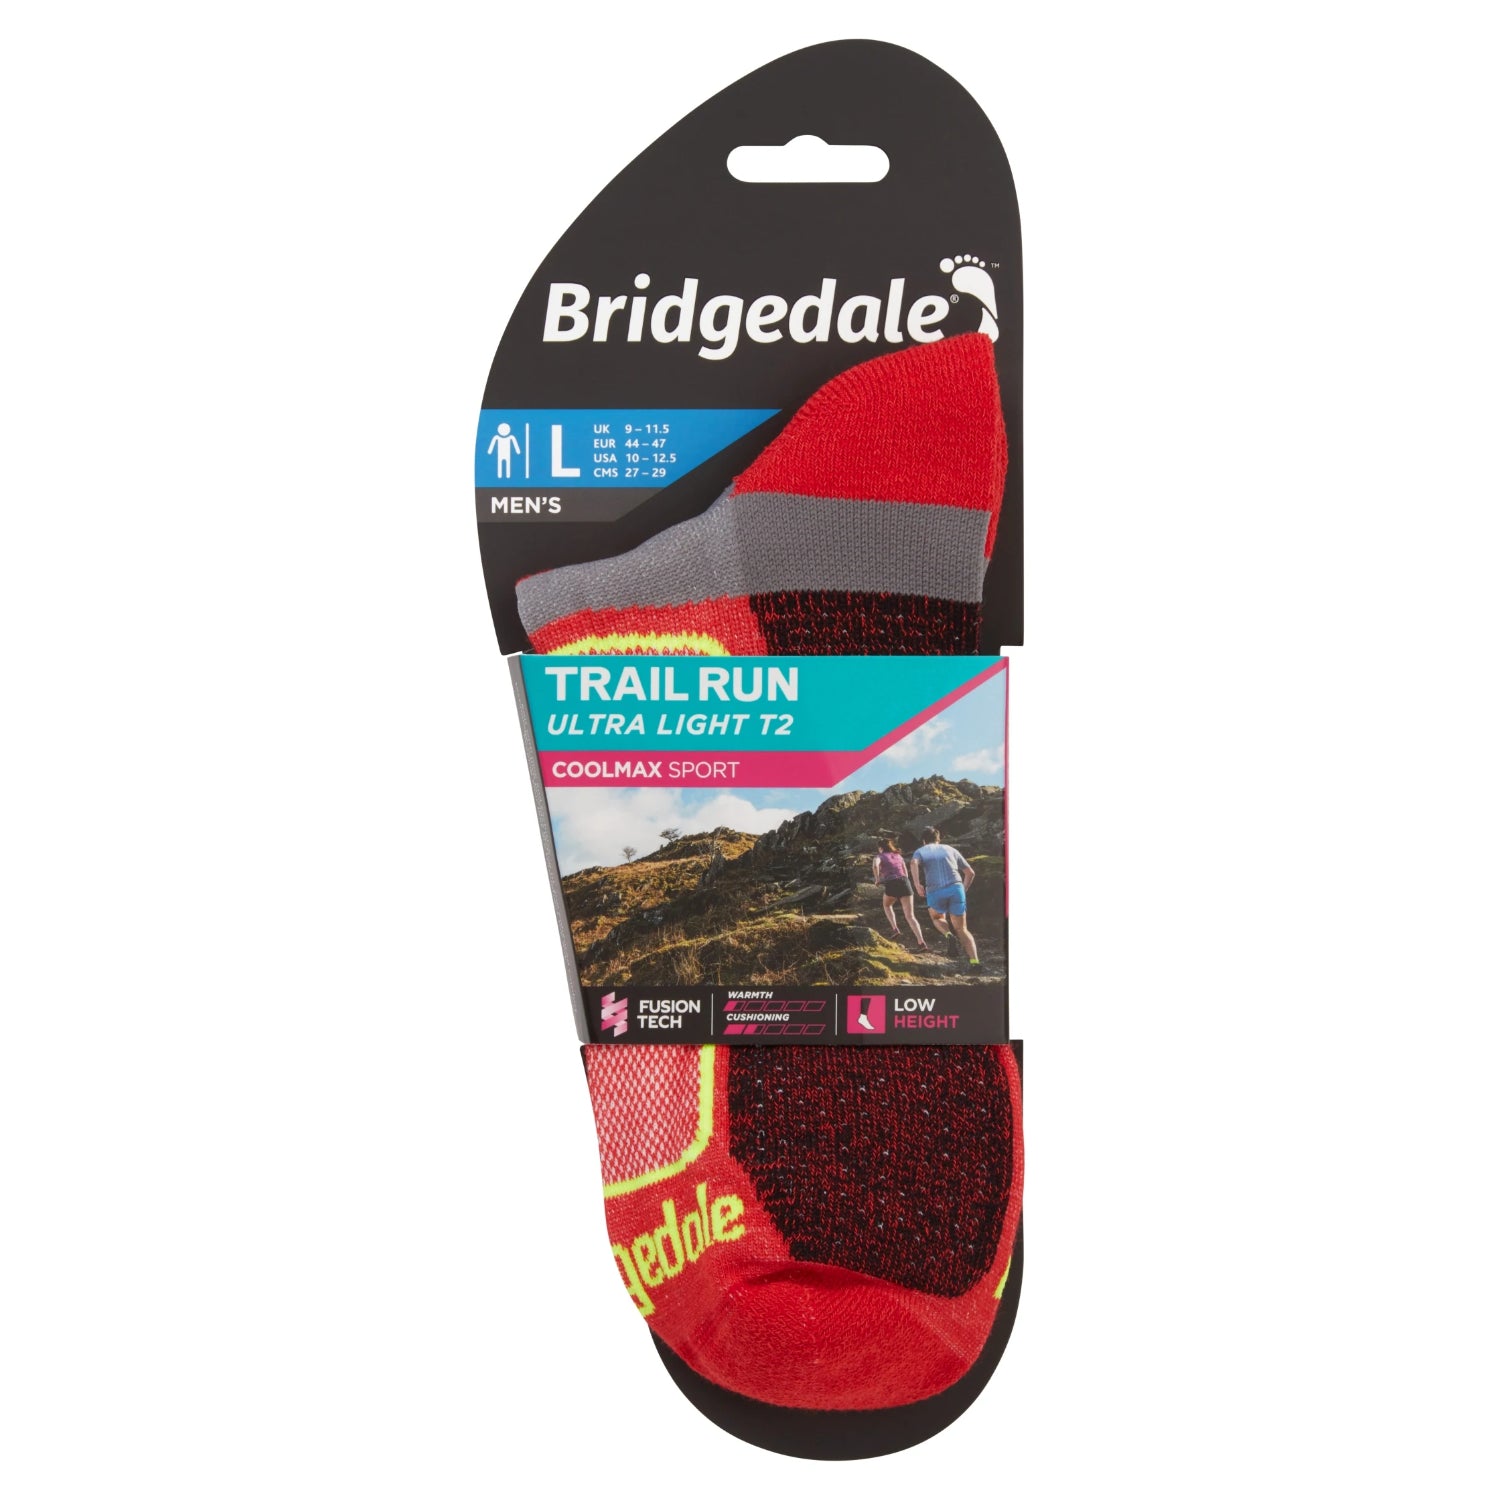 Bridgedale Men's COOLMAX ULTRA-LIGHT Trail Run Socks - Low Cut